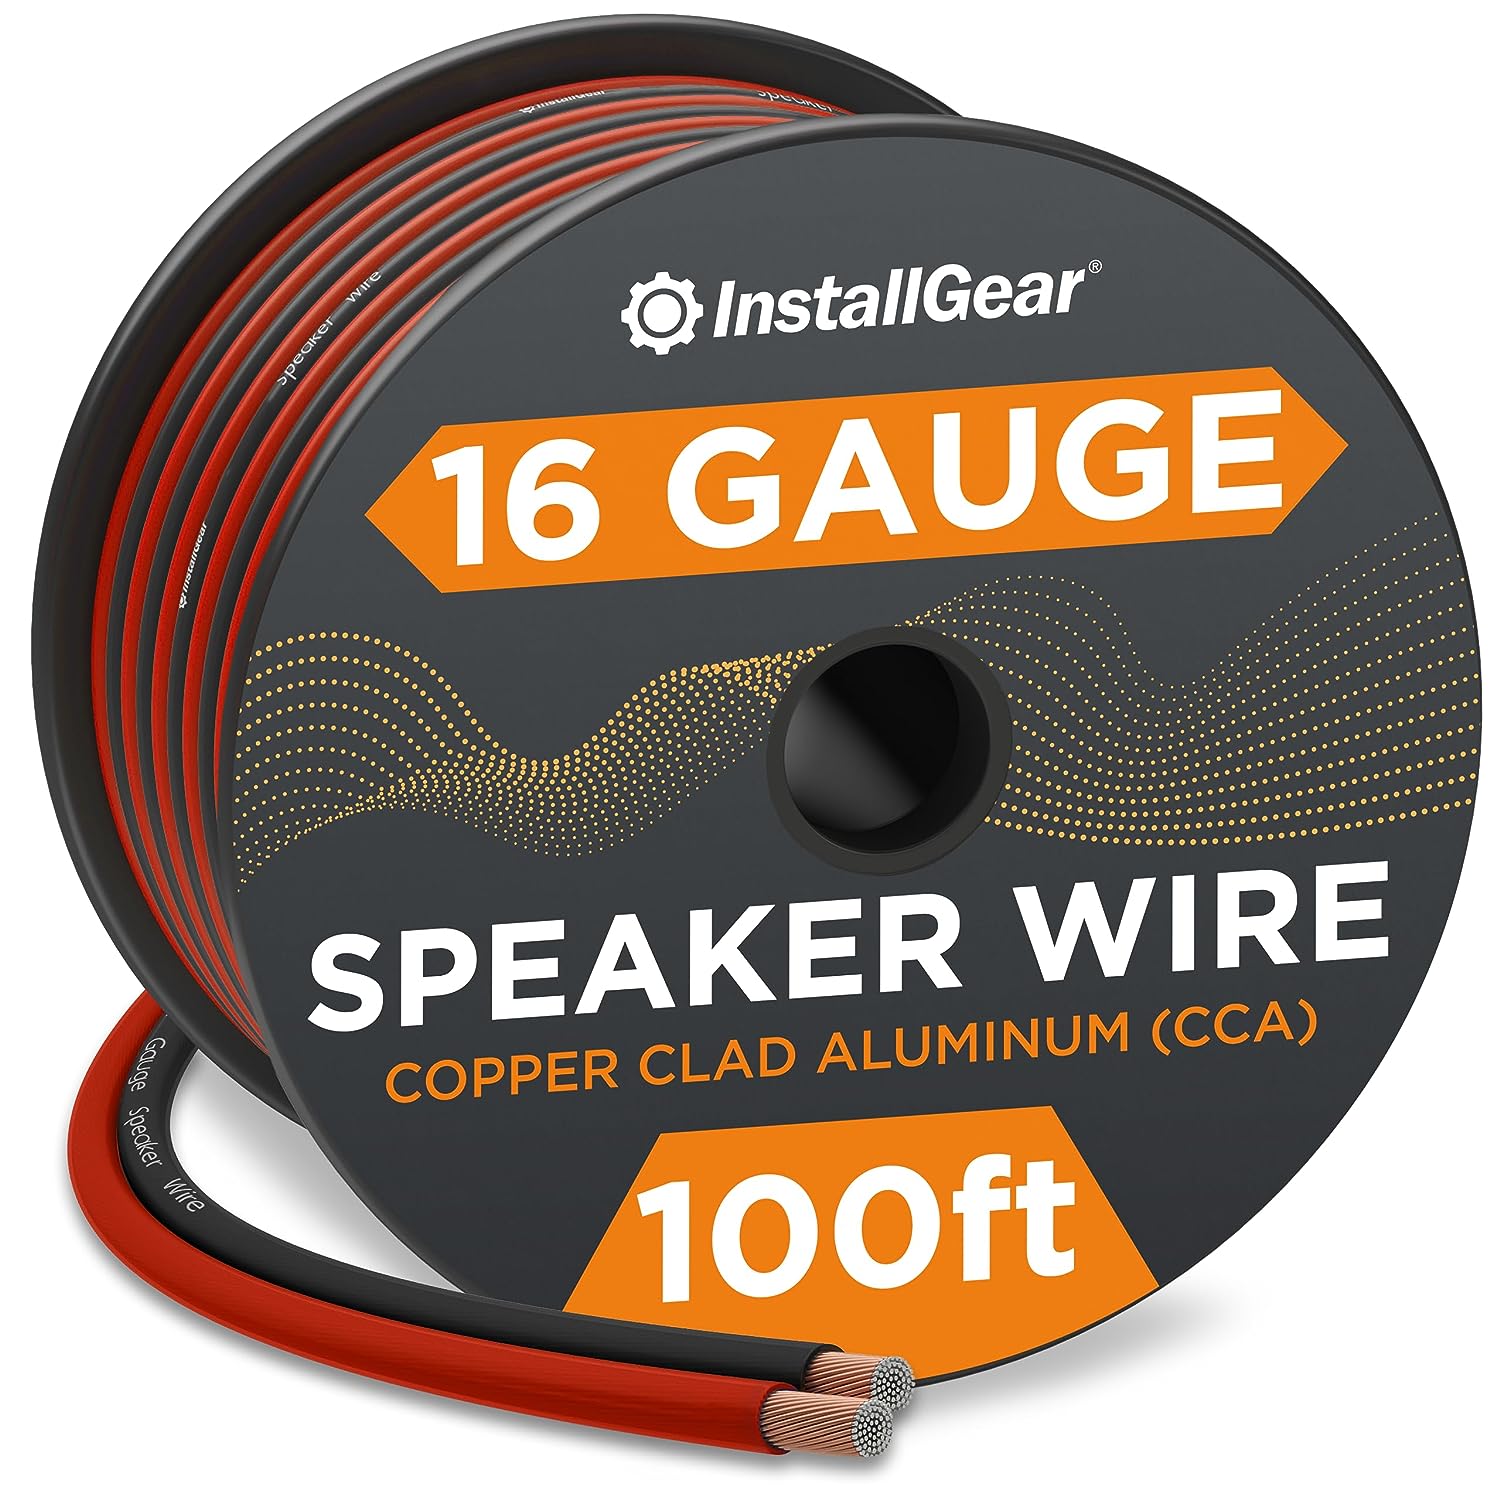 InstallGear 16 Gauge AWG Speaker Wire True Spec and [...]